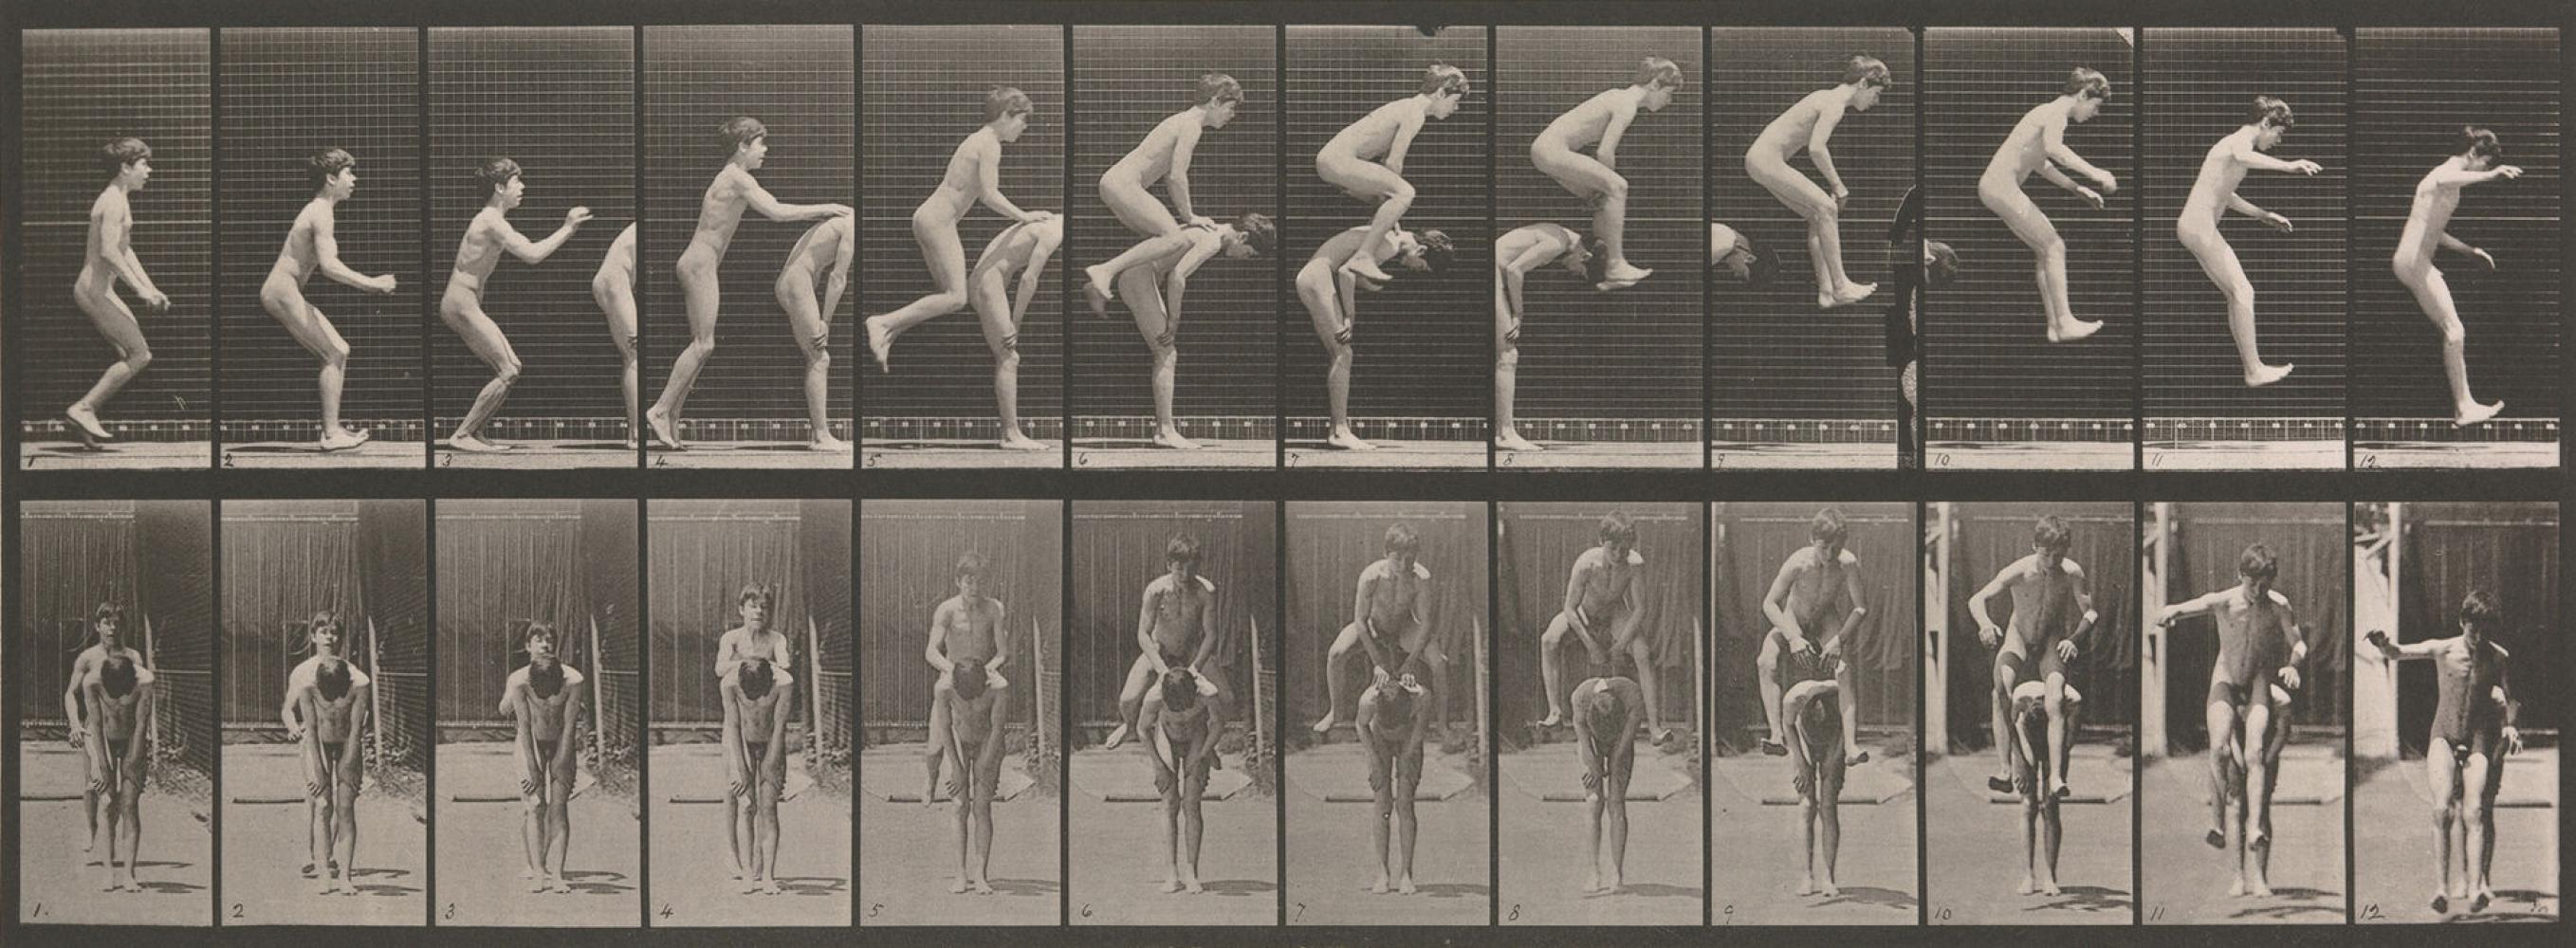 Eadweard Muybridge "Boys Playing Leapfrog", 1883-1886